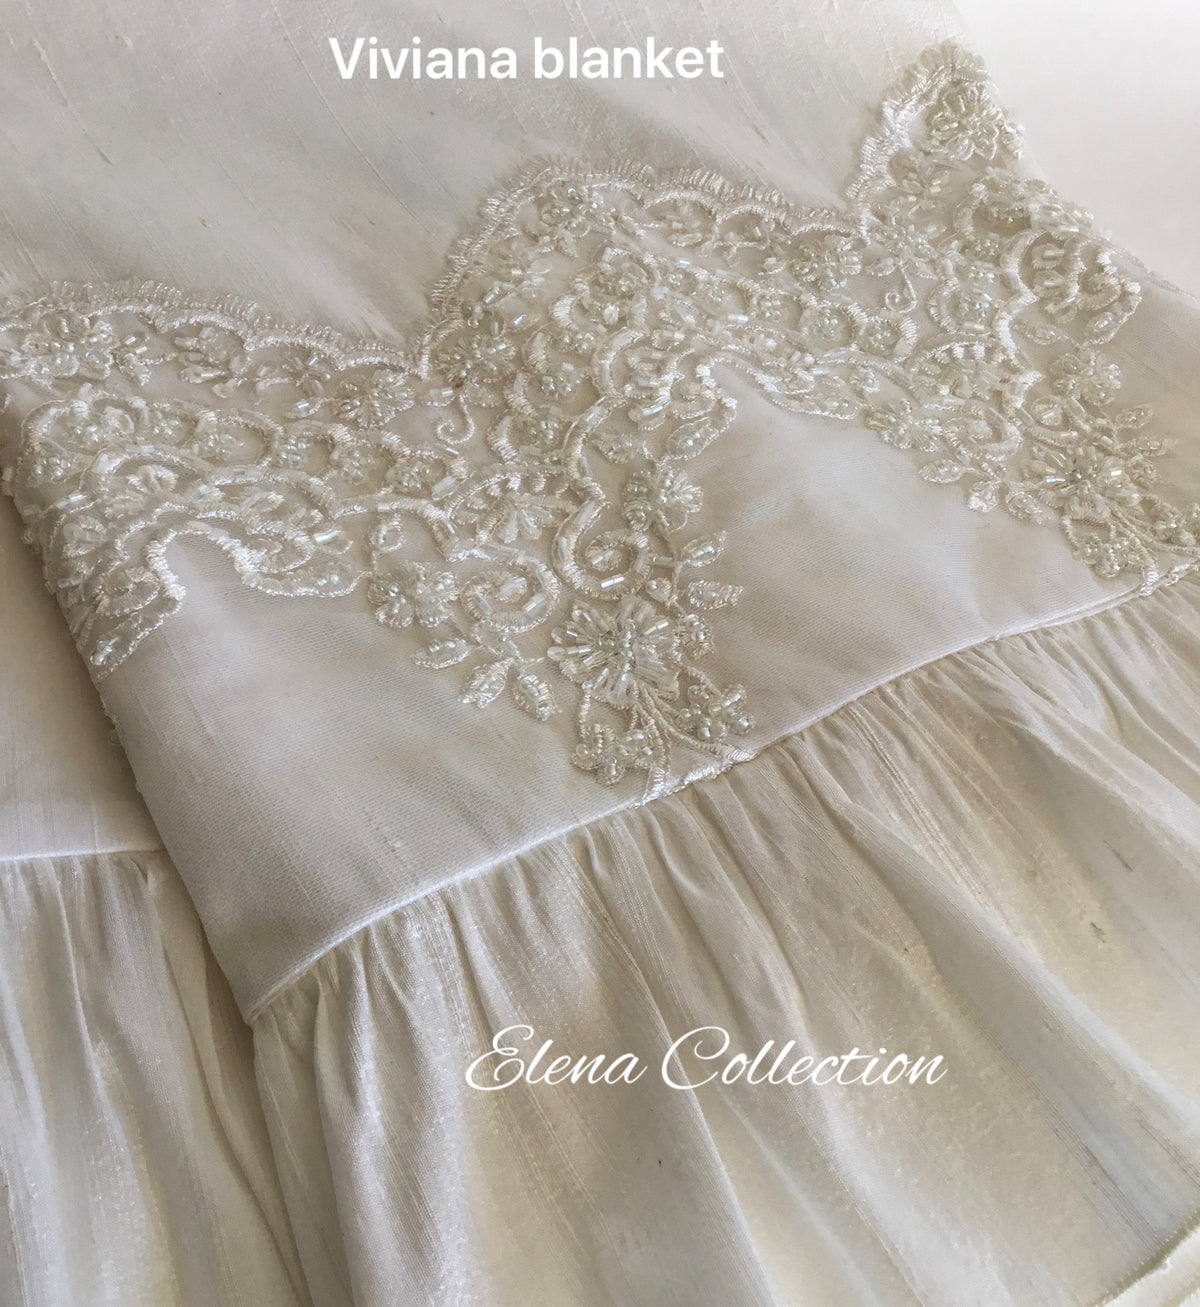 Christening Gown - Viviana